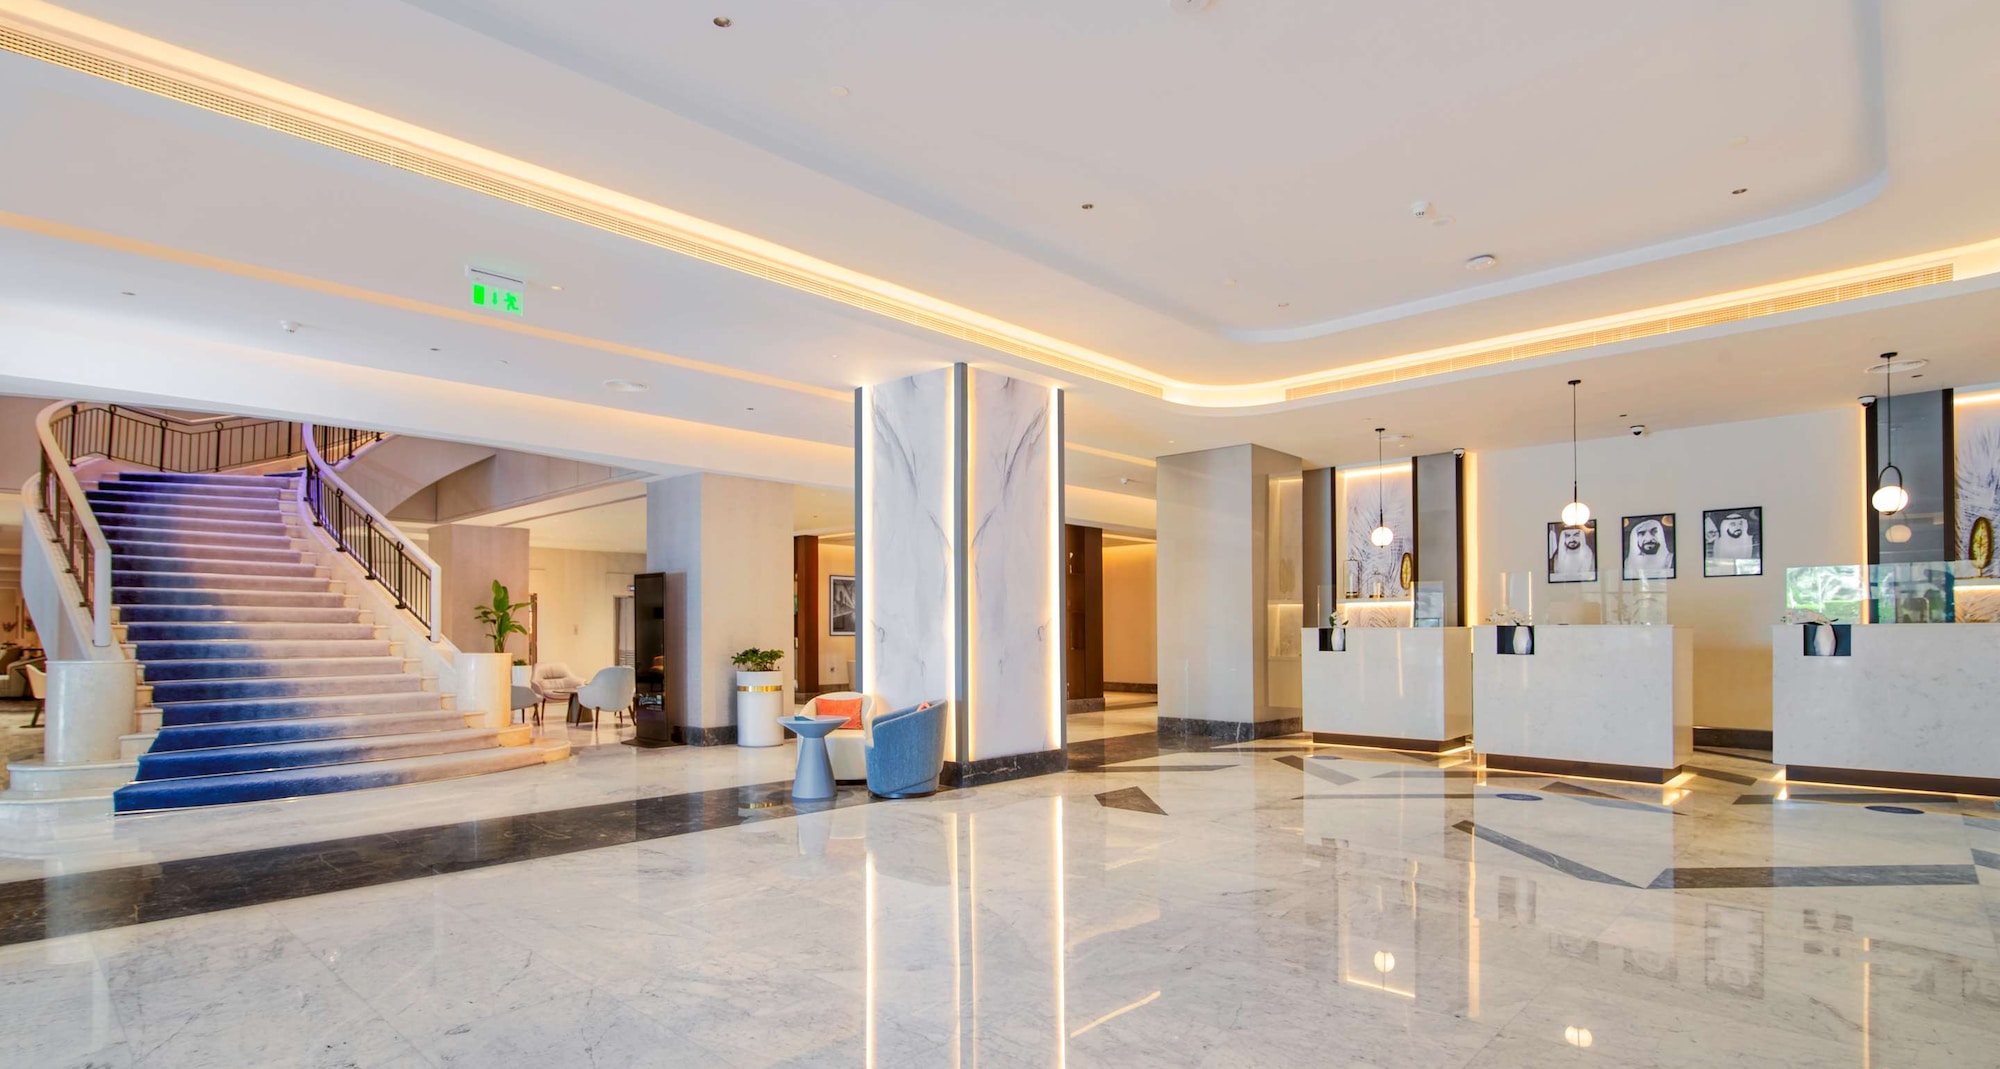 Radisson Blu Hotel & Resort, Abu Dhabi Corniche Lobby